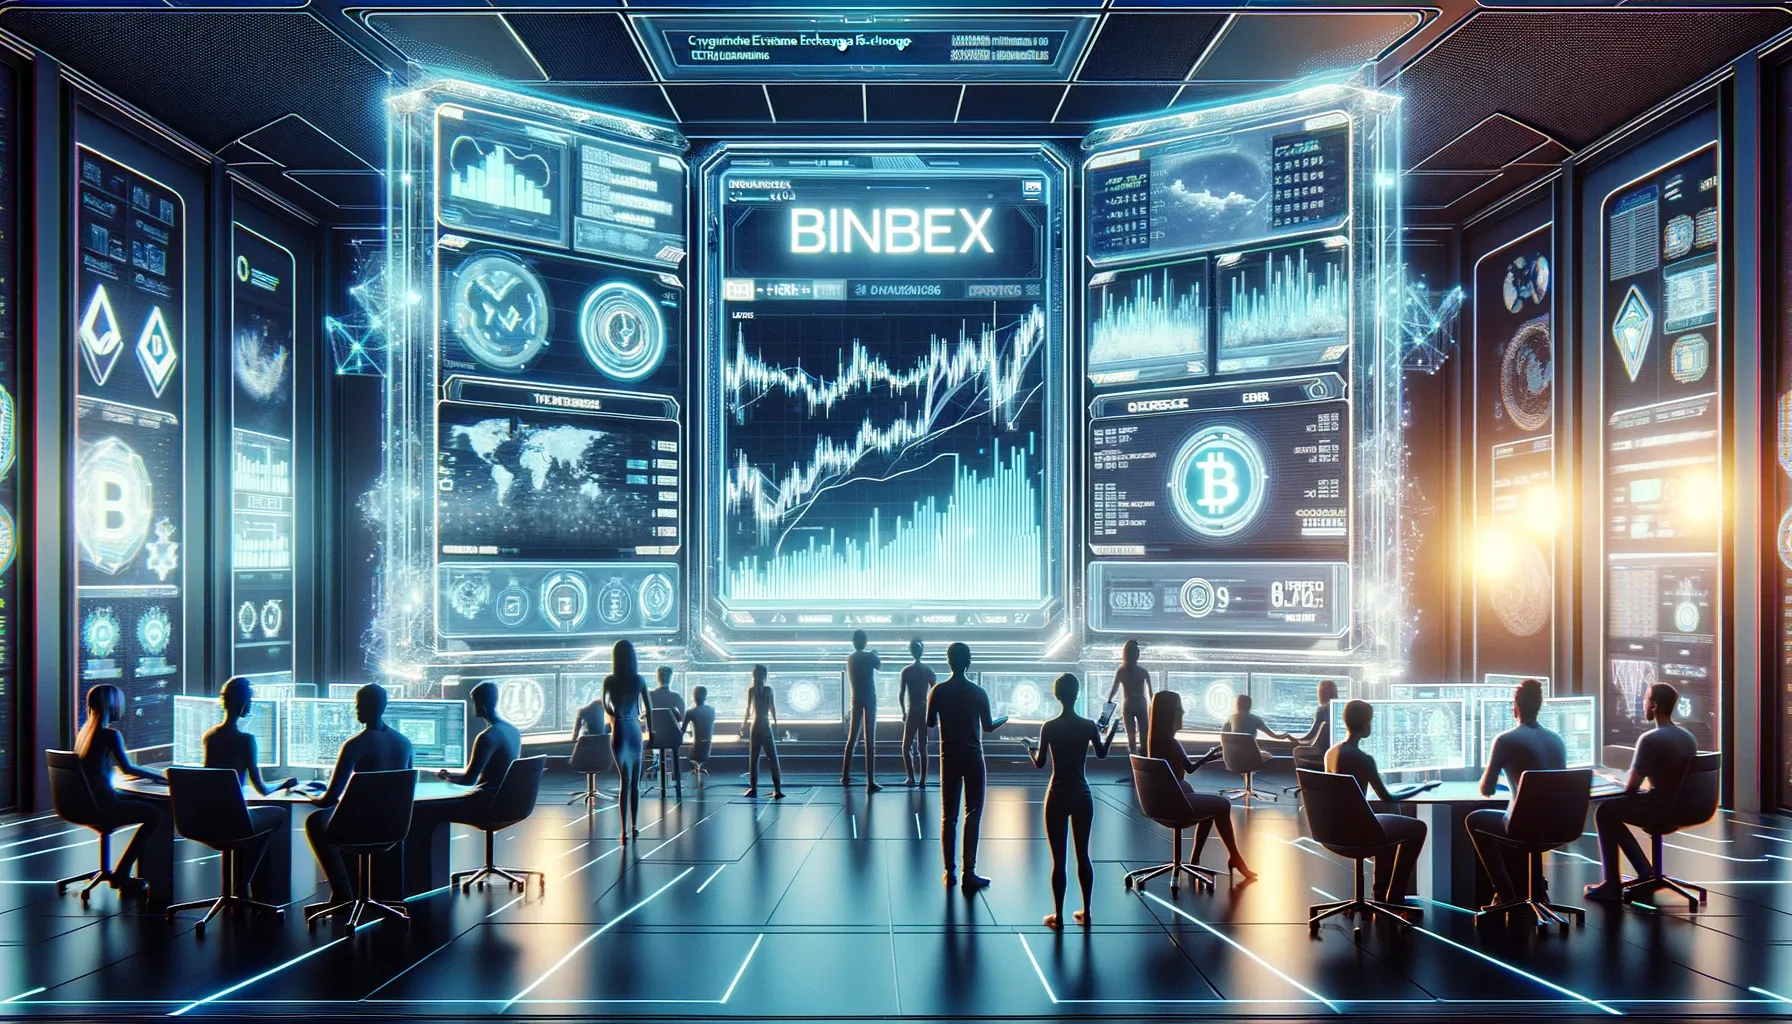 Binbex Cryptocurrency Platform